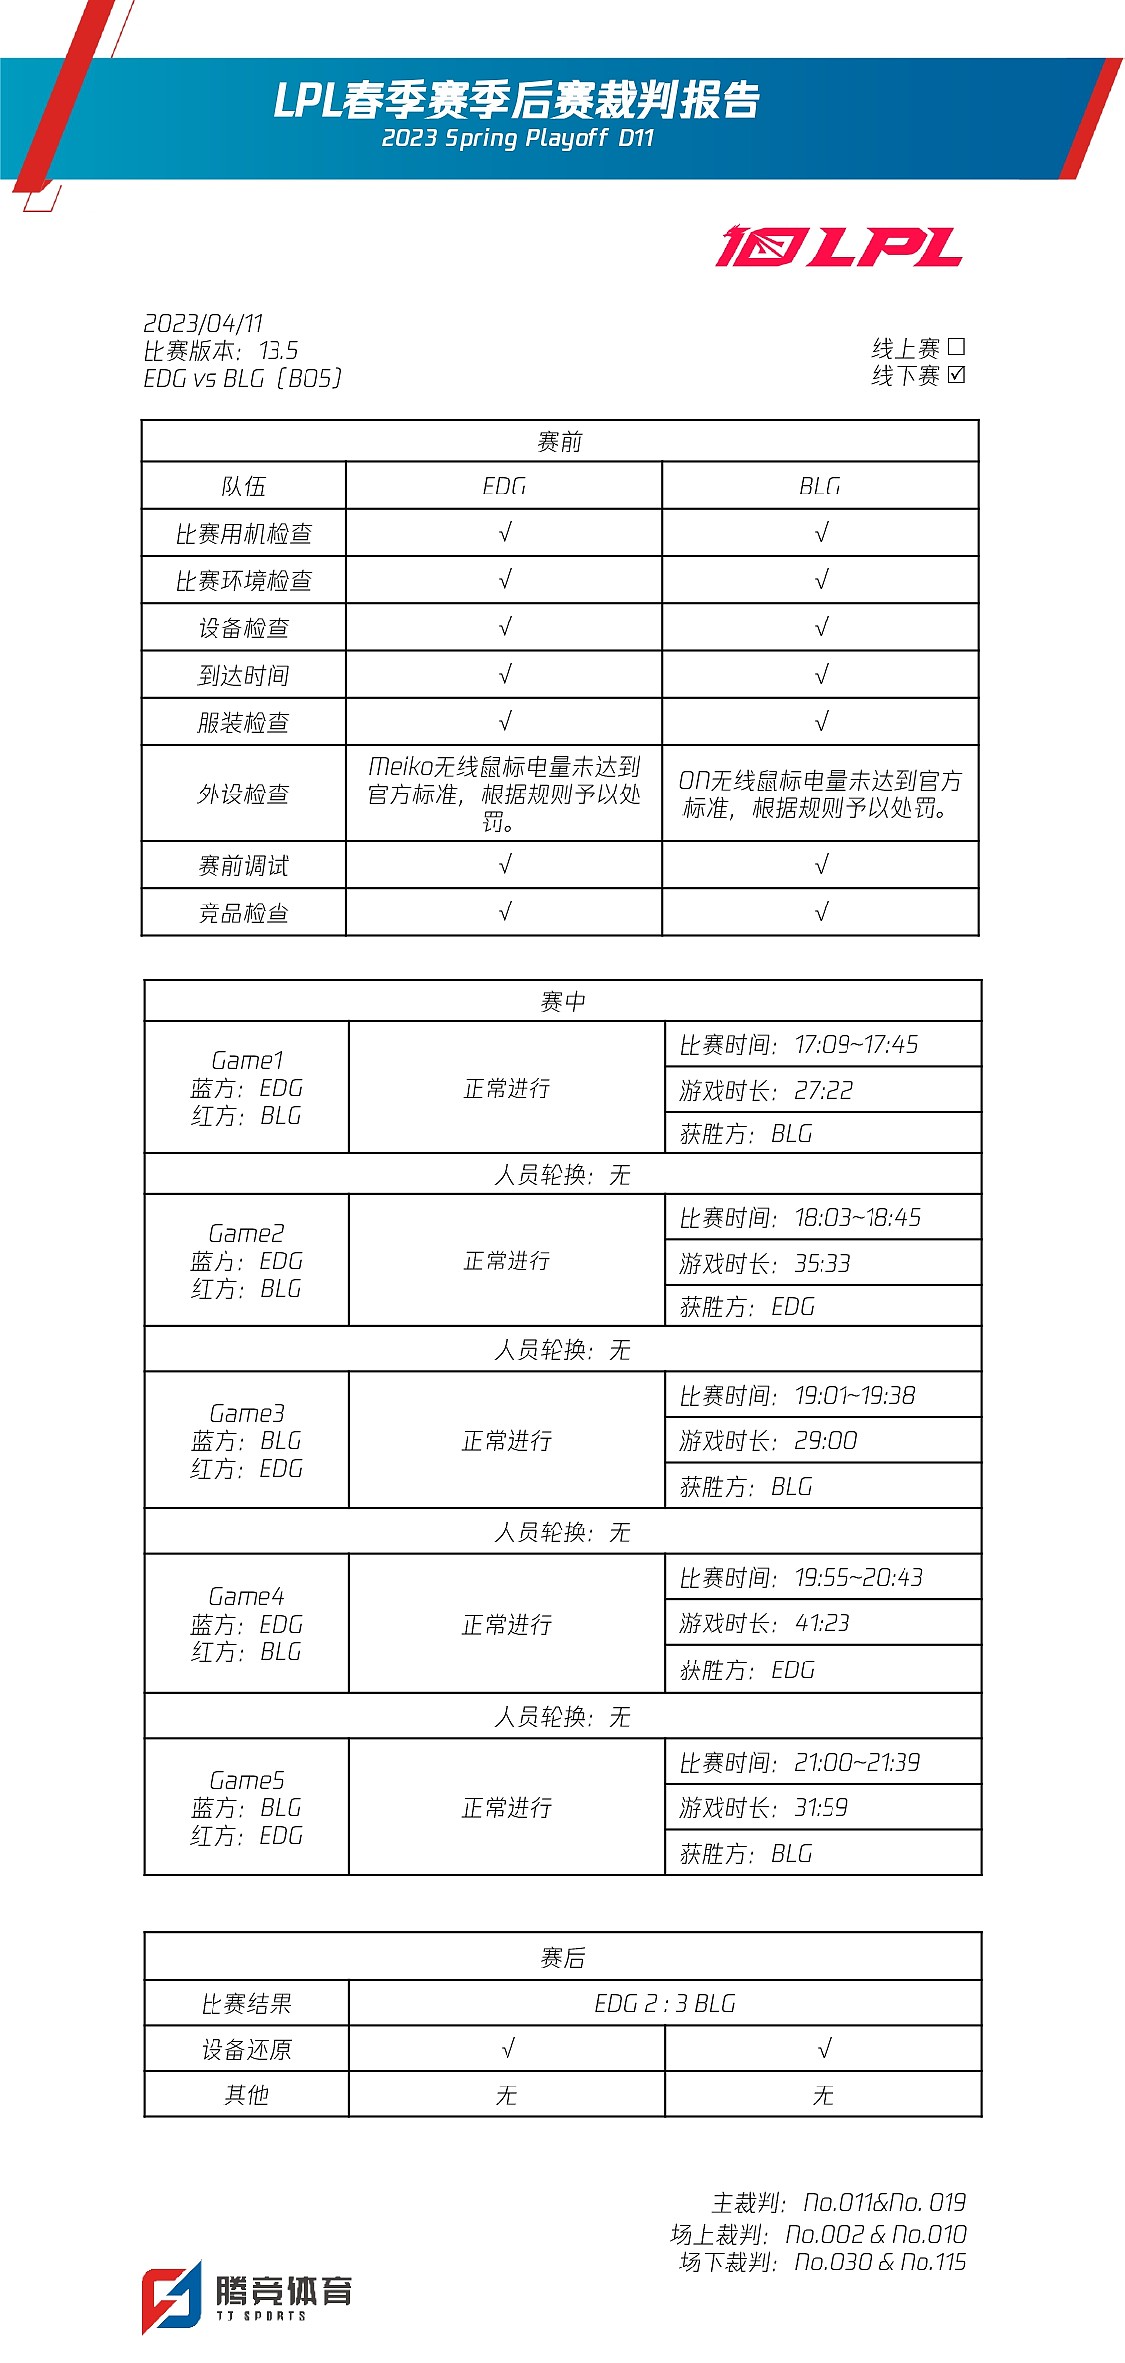 LPL裁判报告：Meiko、ON无线鼠标电量未达标被处罚 - 1